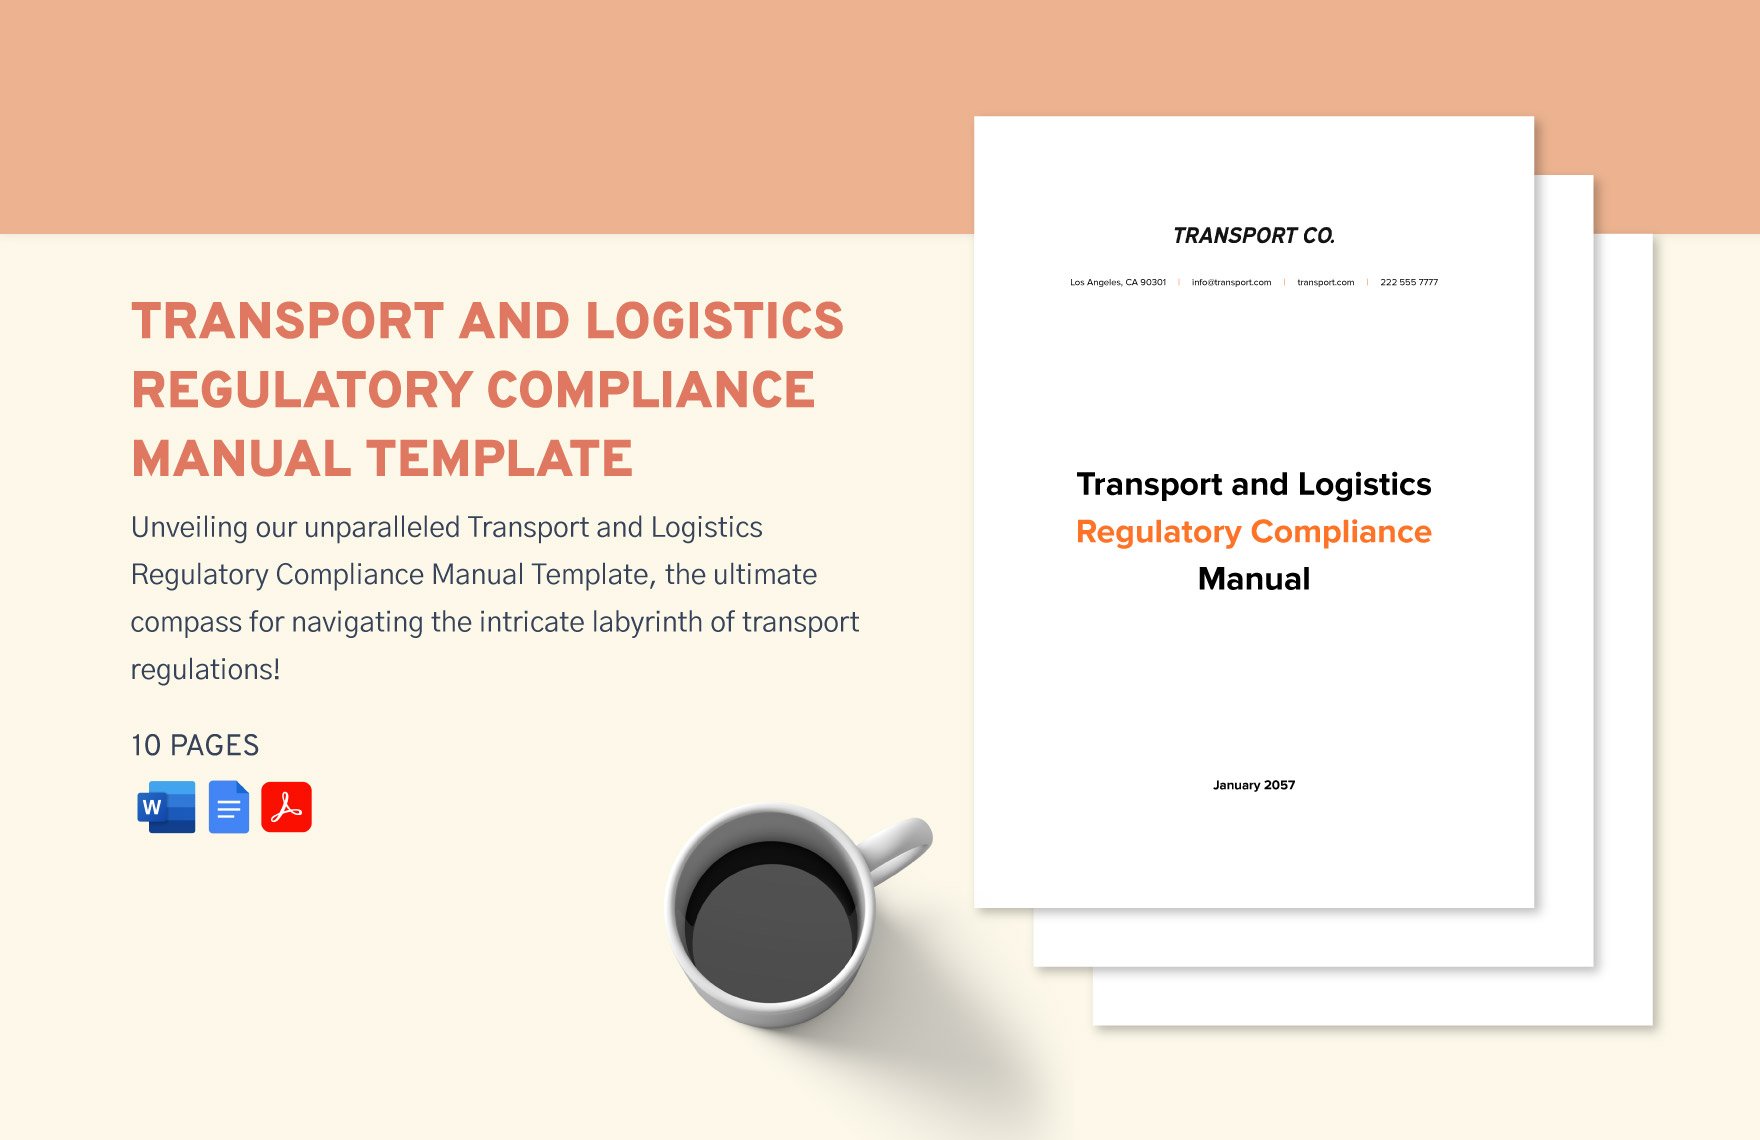 Transport and Logistics Regulatory Compliance Manual Template